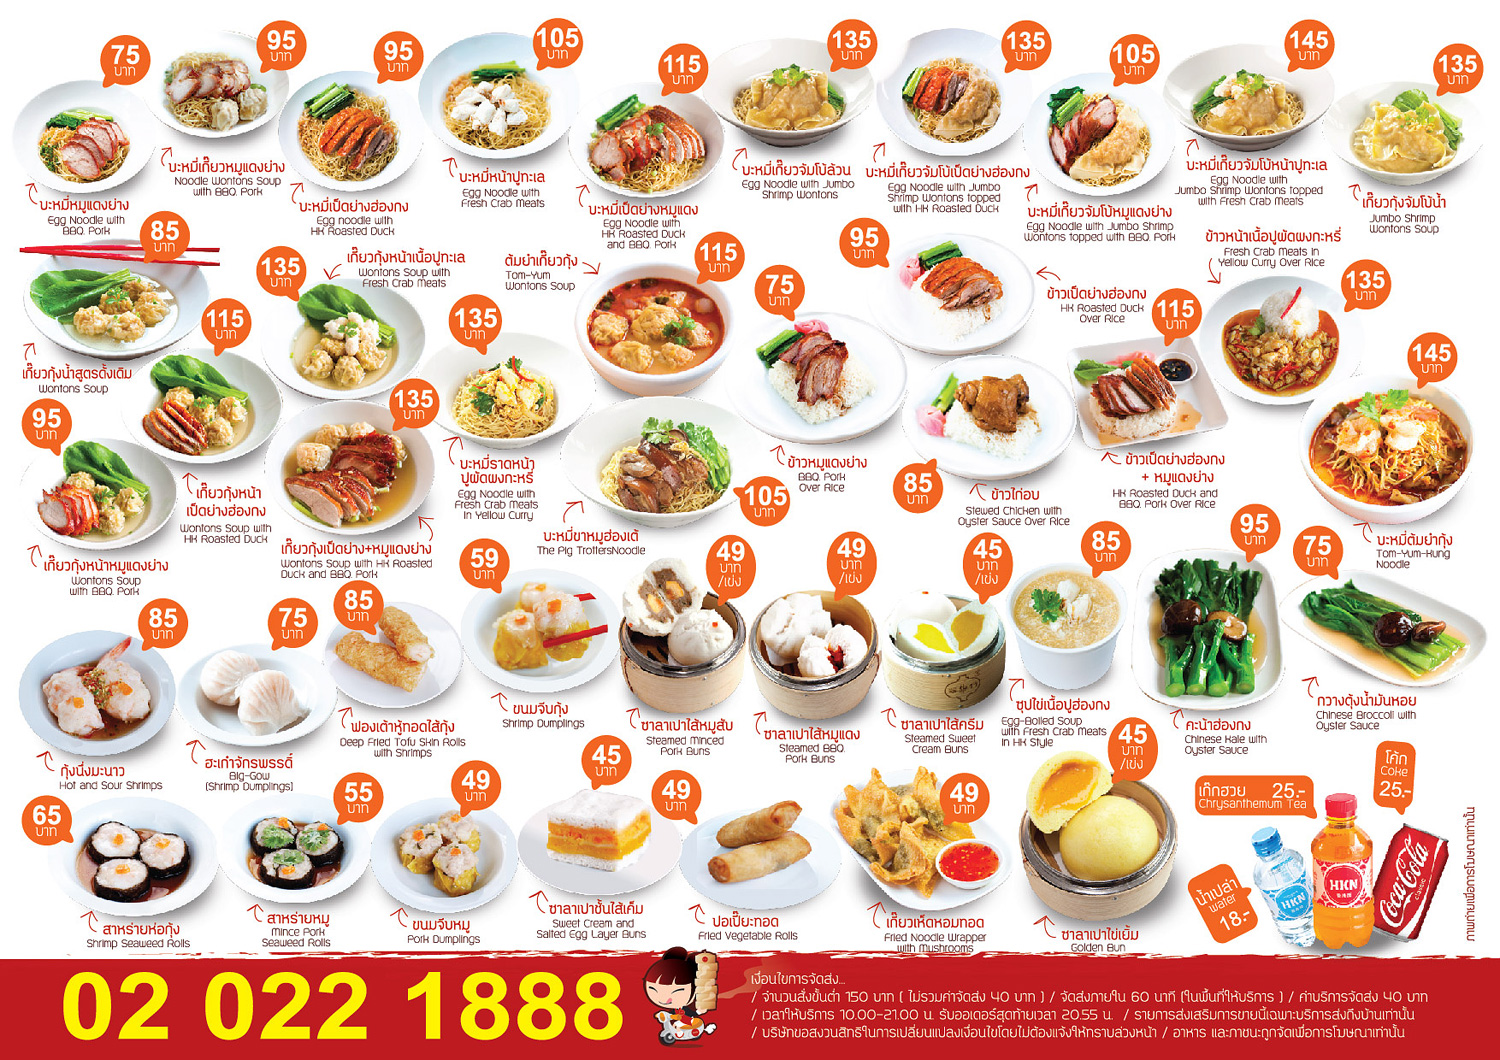 hongkong-noodle-delivery-menu